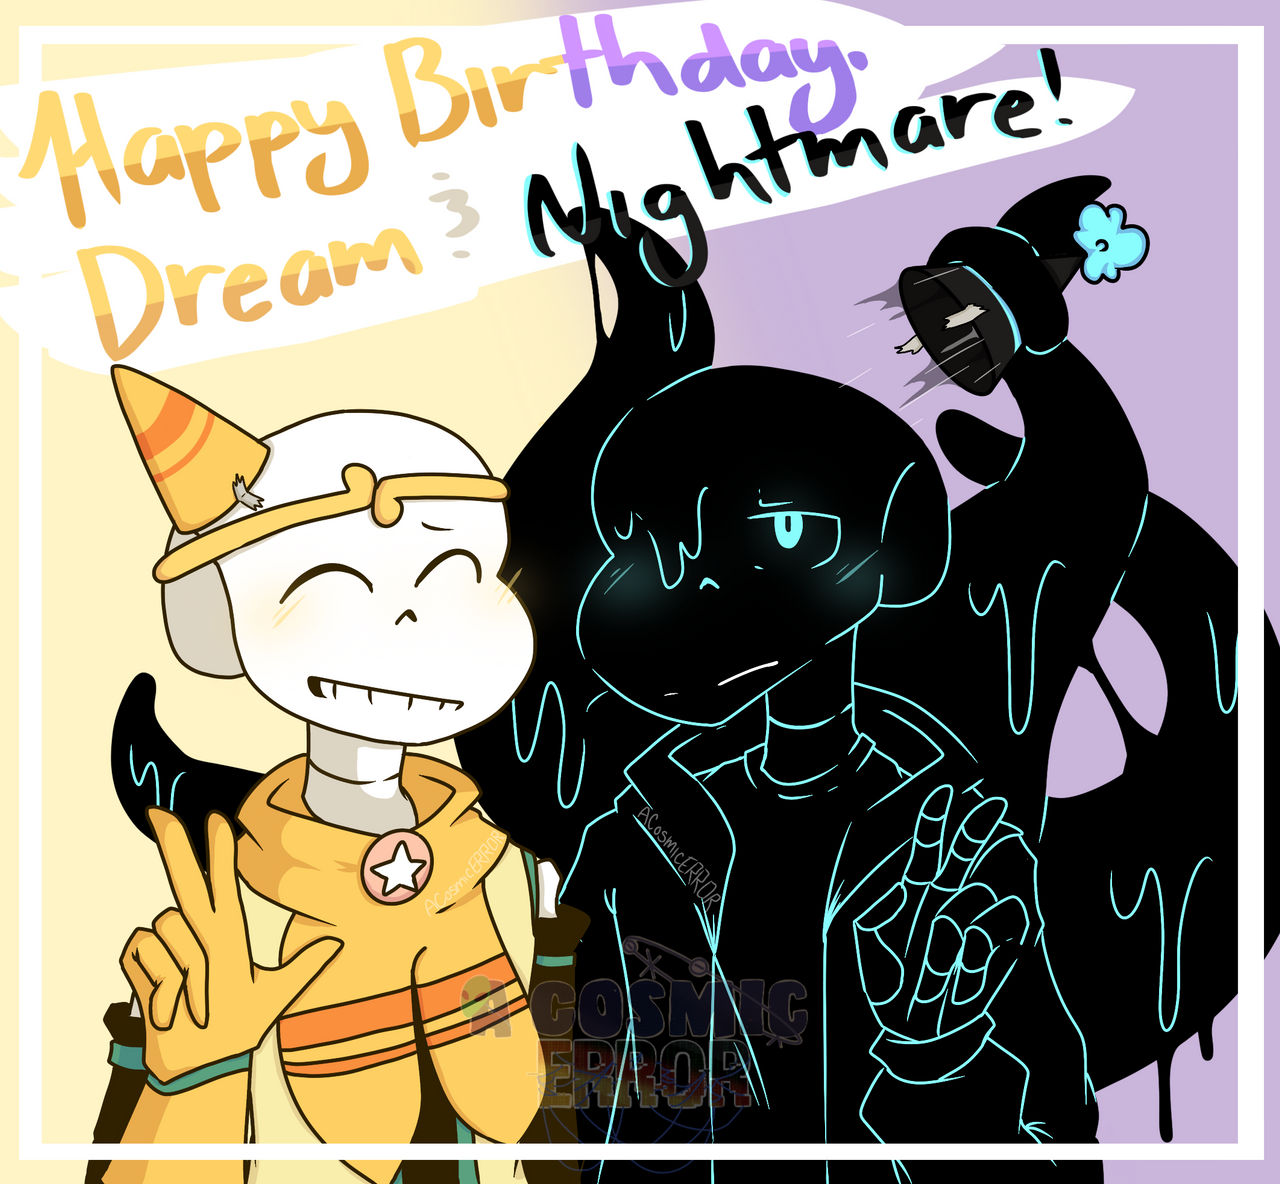 Happy birthday dream and nightmare